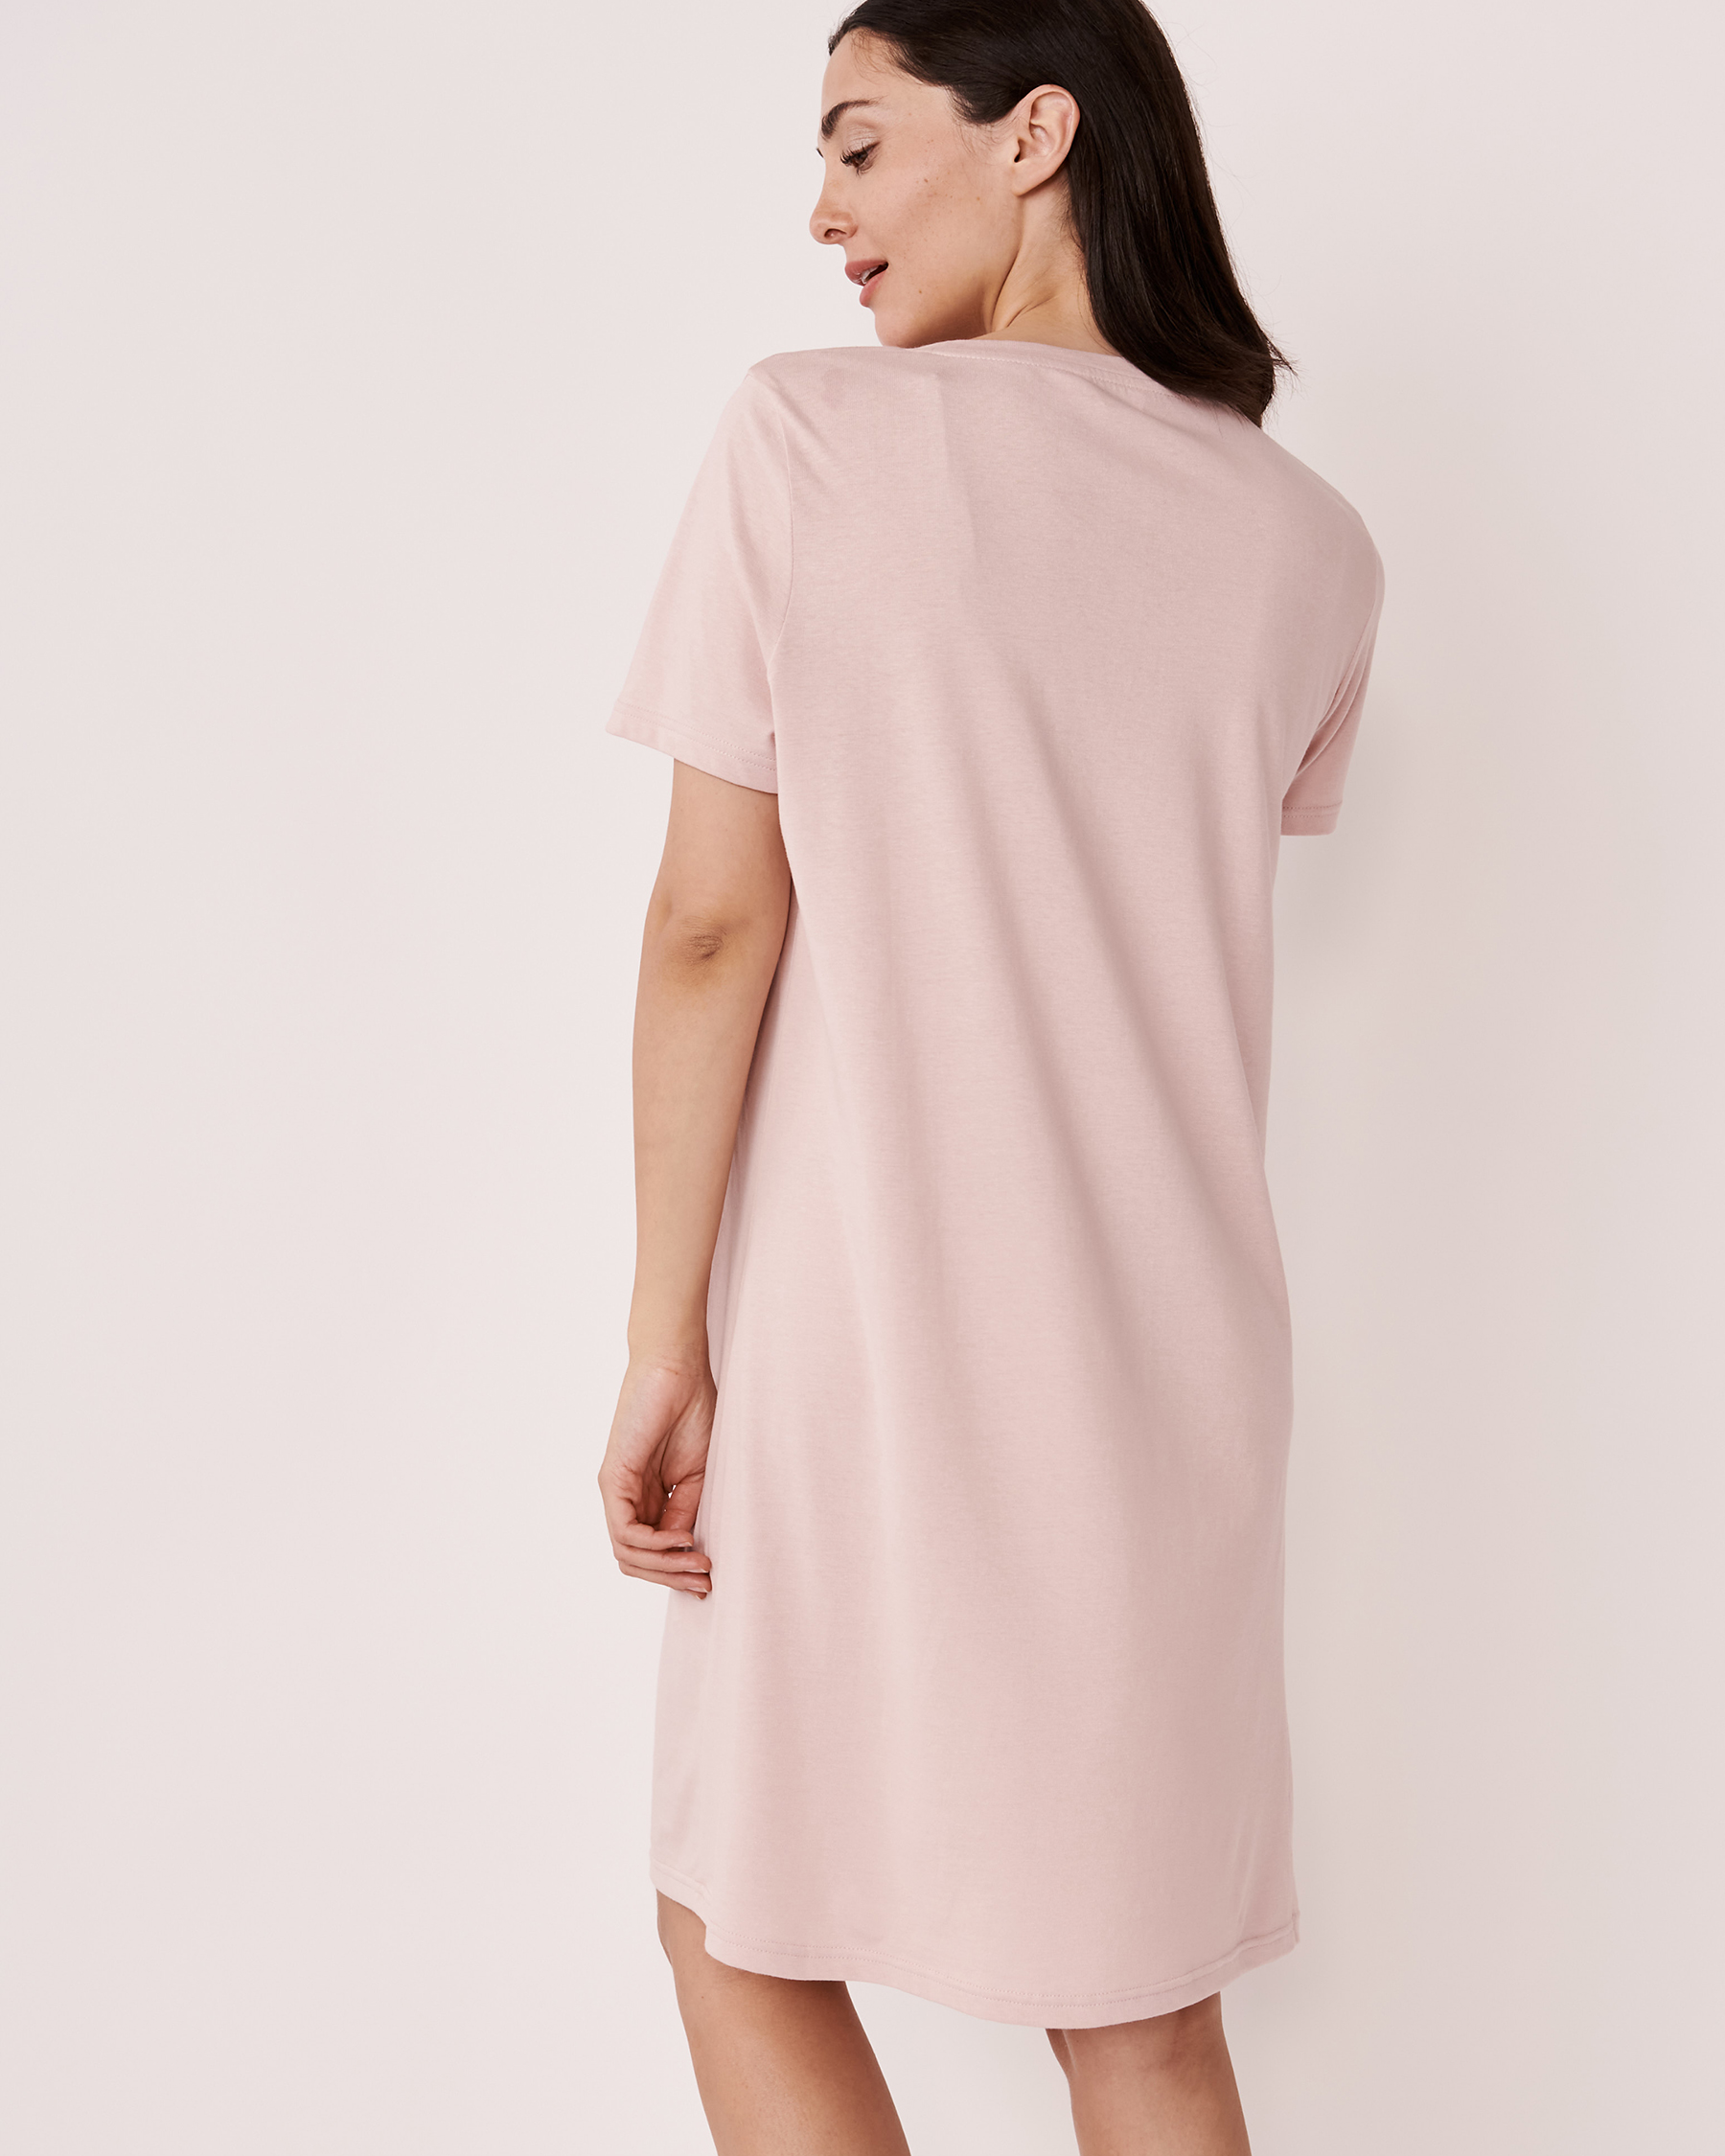 La Vie en Rose Cotton Short Sleeve Sleepshirt. 5